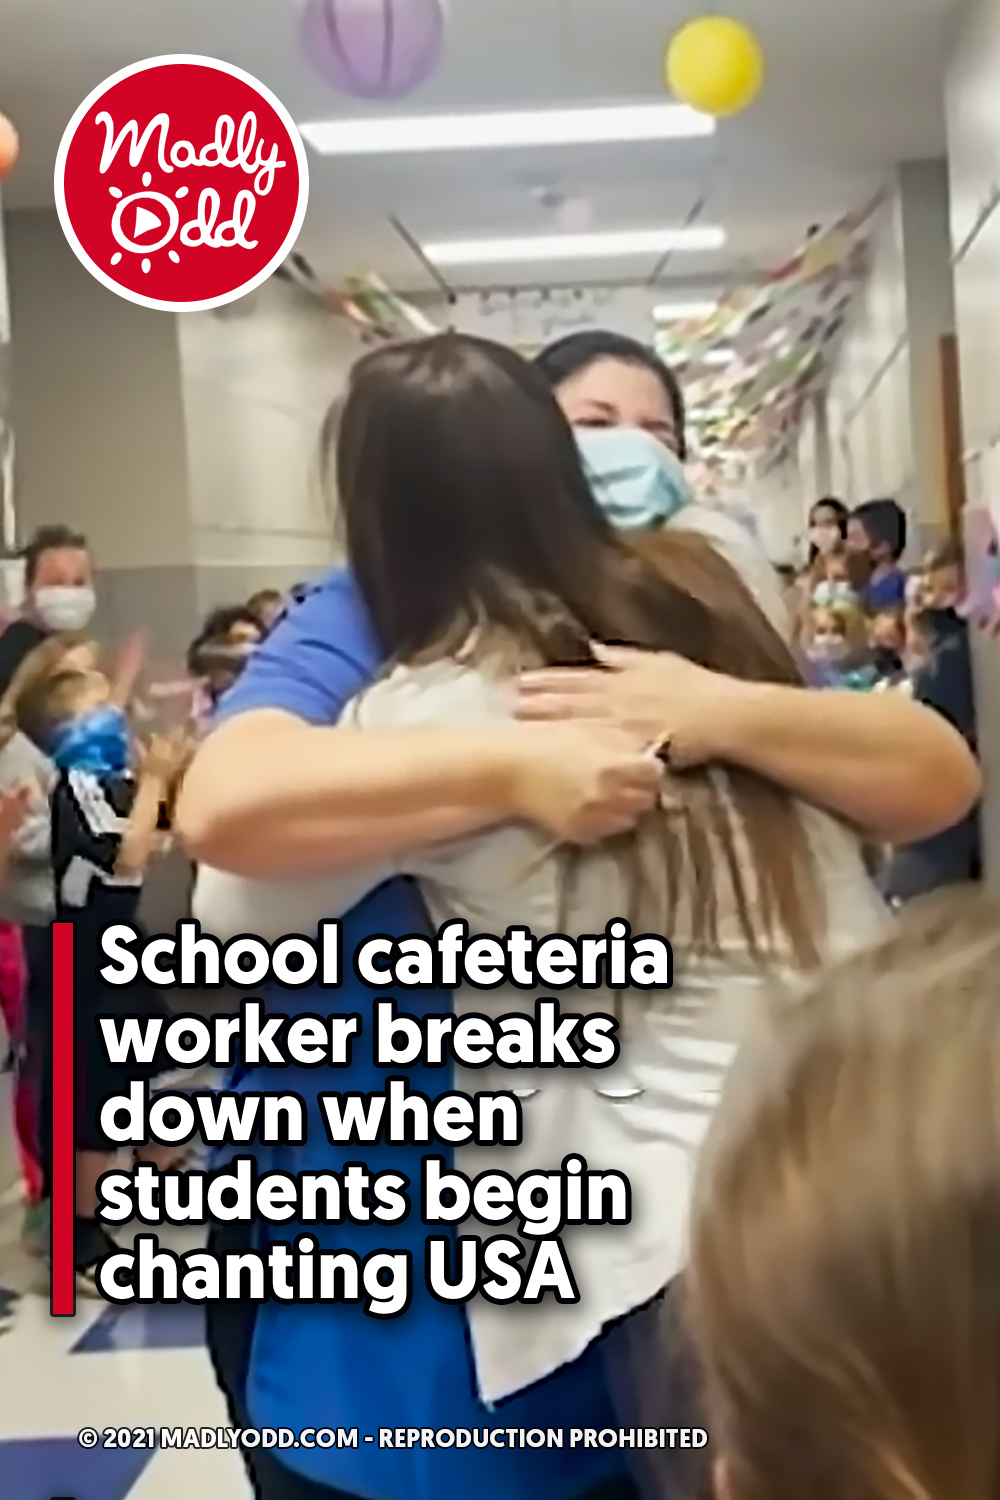 School cafeteria worker breaks down when students begin chanting USA